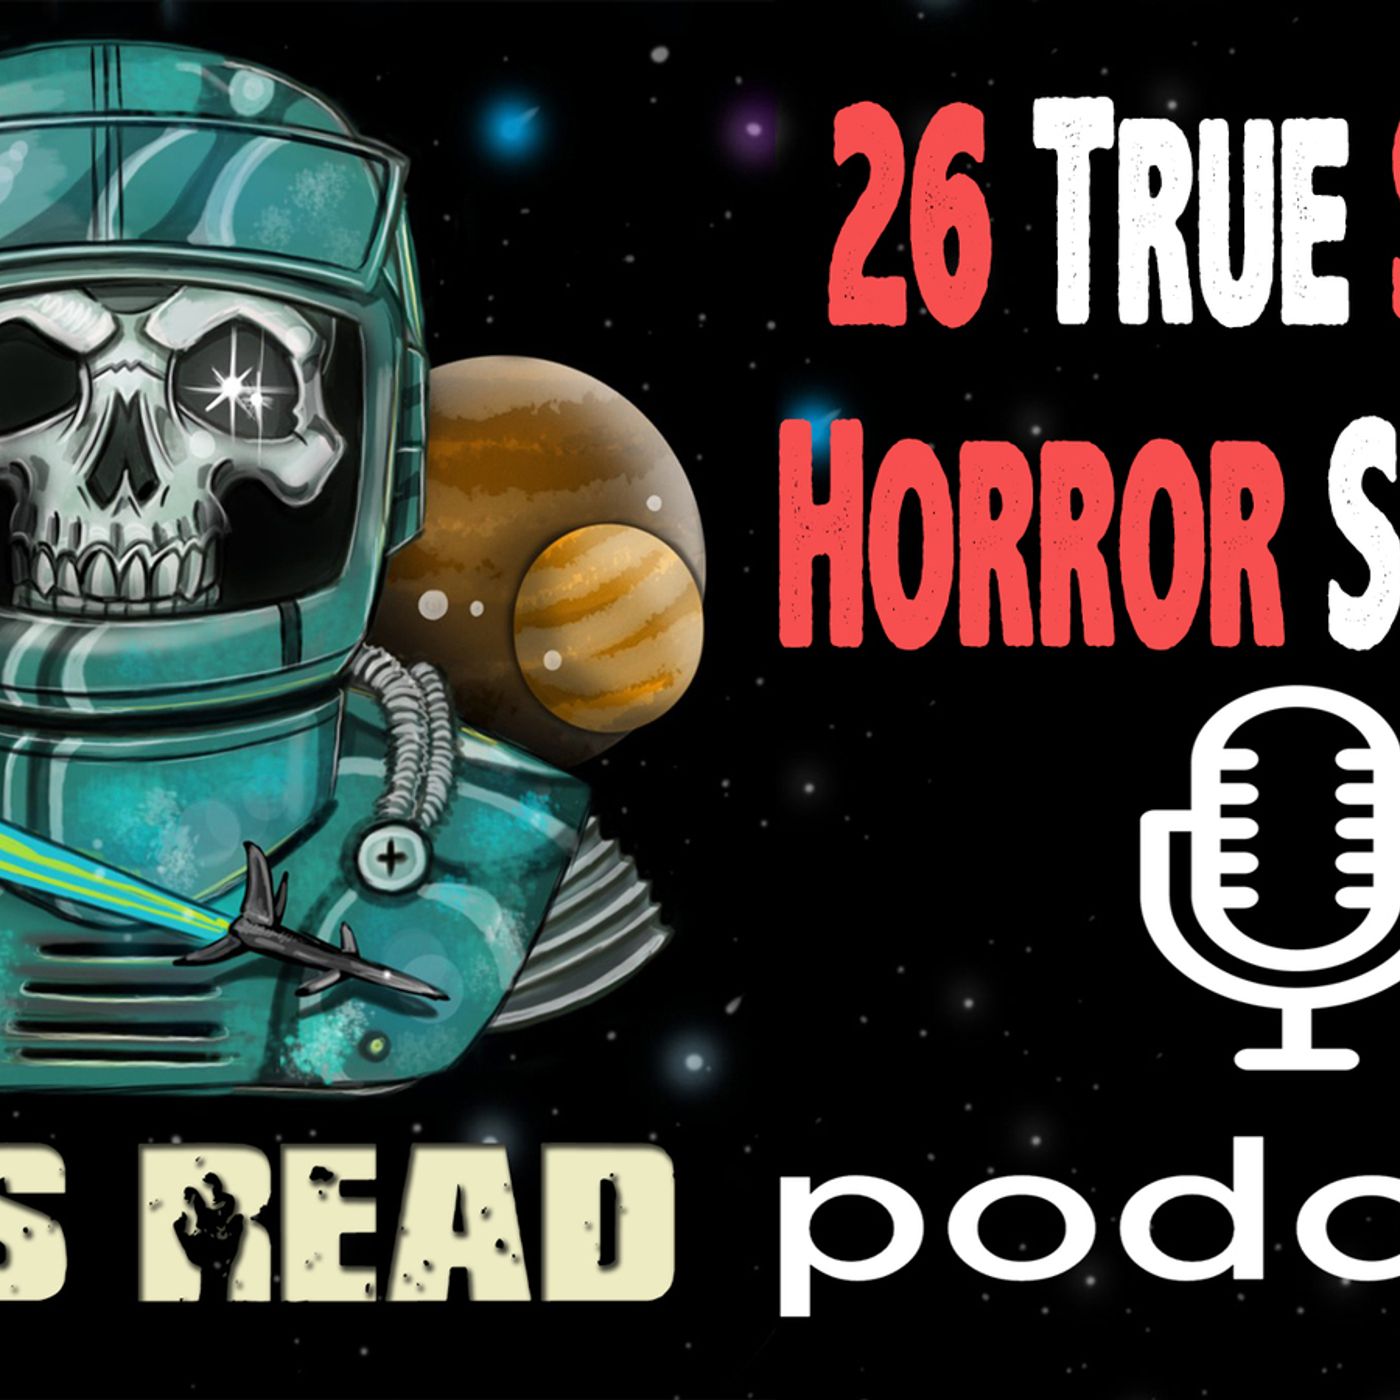 4: Episode 004 | Walmart & Shadow People Stories | 26 True Scary Horror Stories